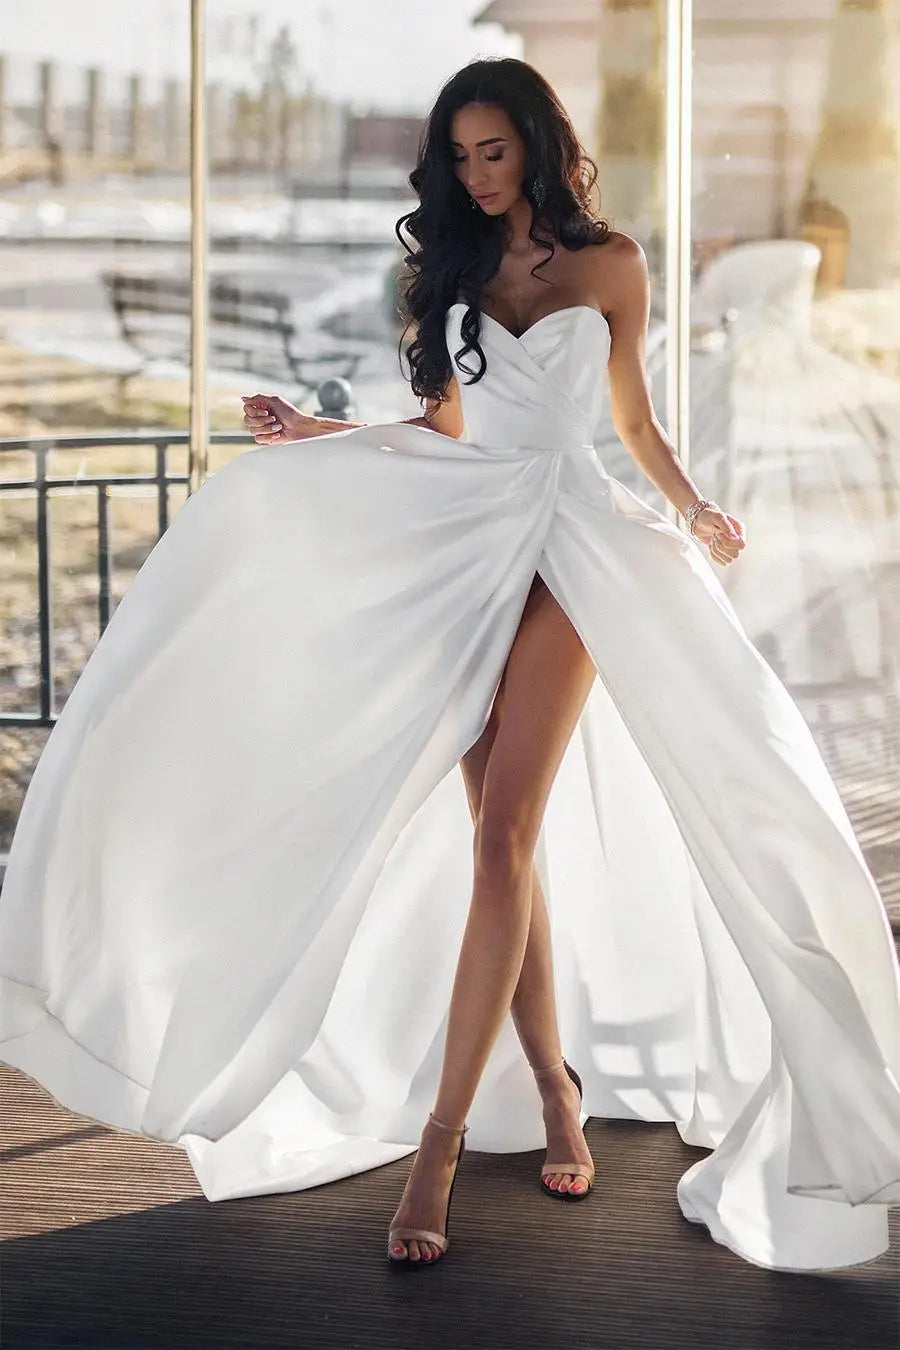 Gaun pengantin pantai sederhana plus ukuran seksi kekasih lengan baju celah gaun pengantin vestido de noiva mariage disesuaikan